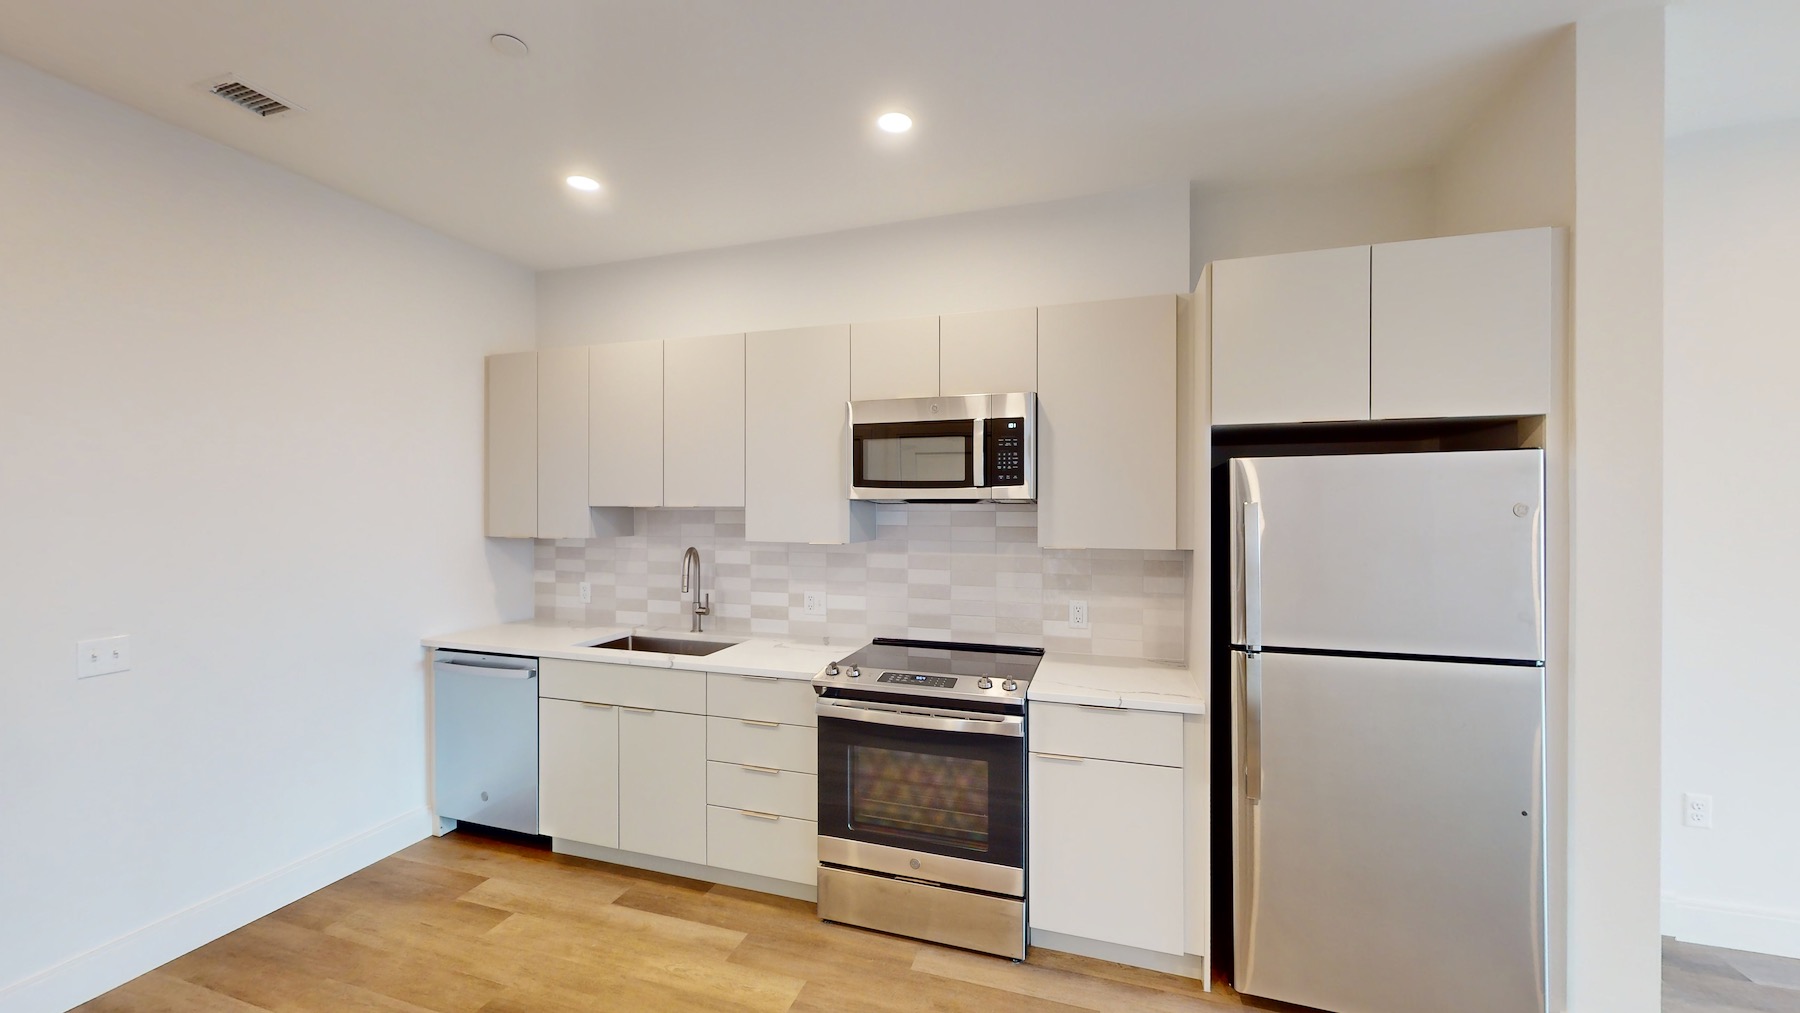 Photos of apartment on Coleman,Boston MA 02125